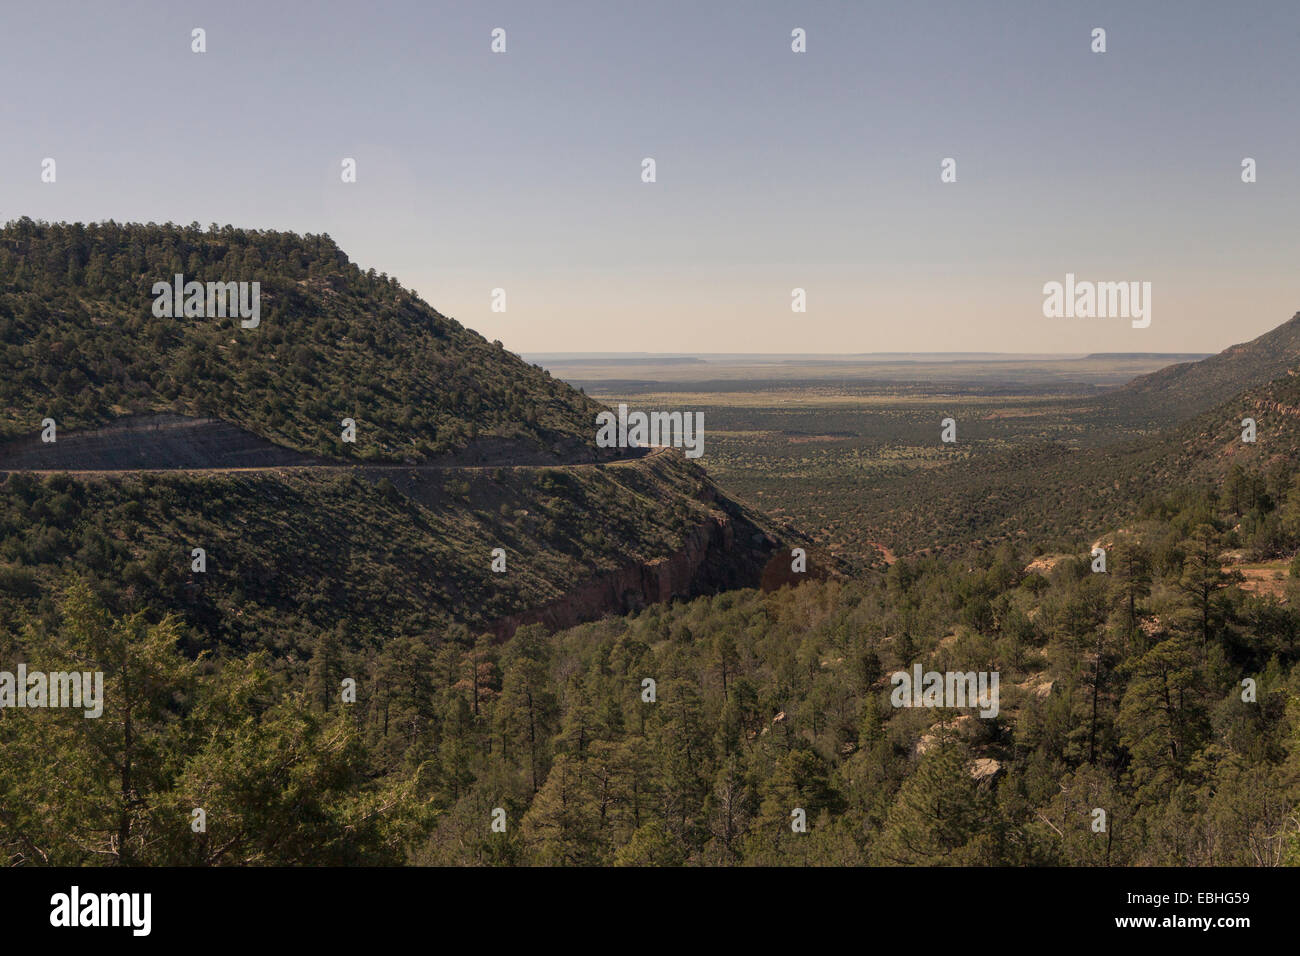 Landscape view, Oklahoma, USA Stock Photo